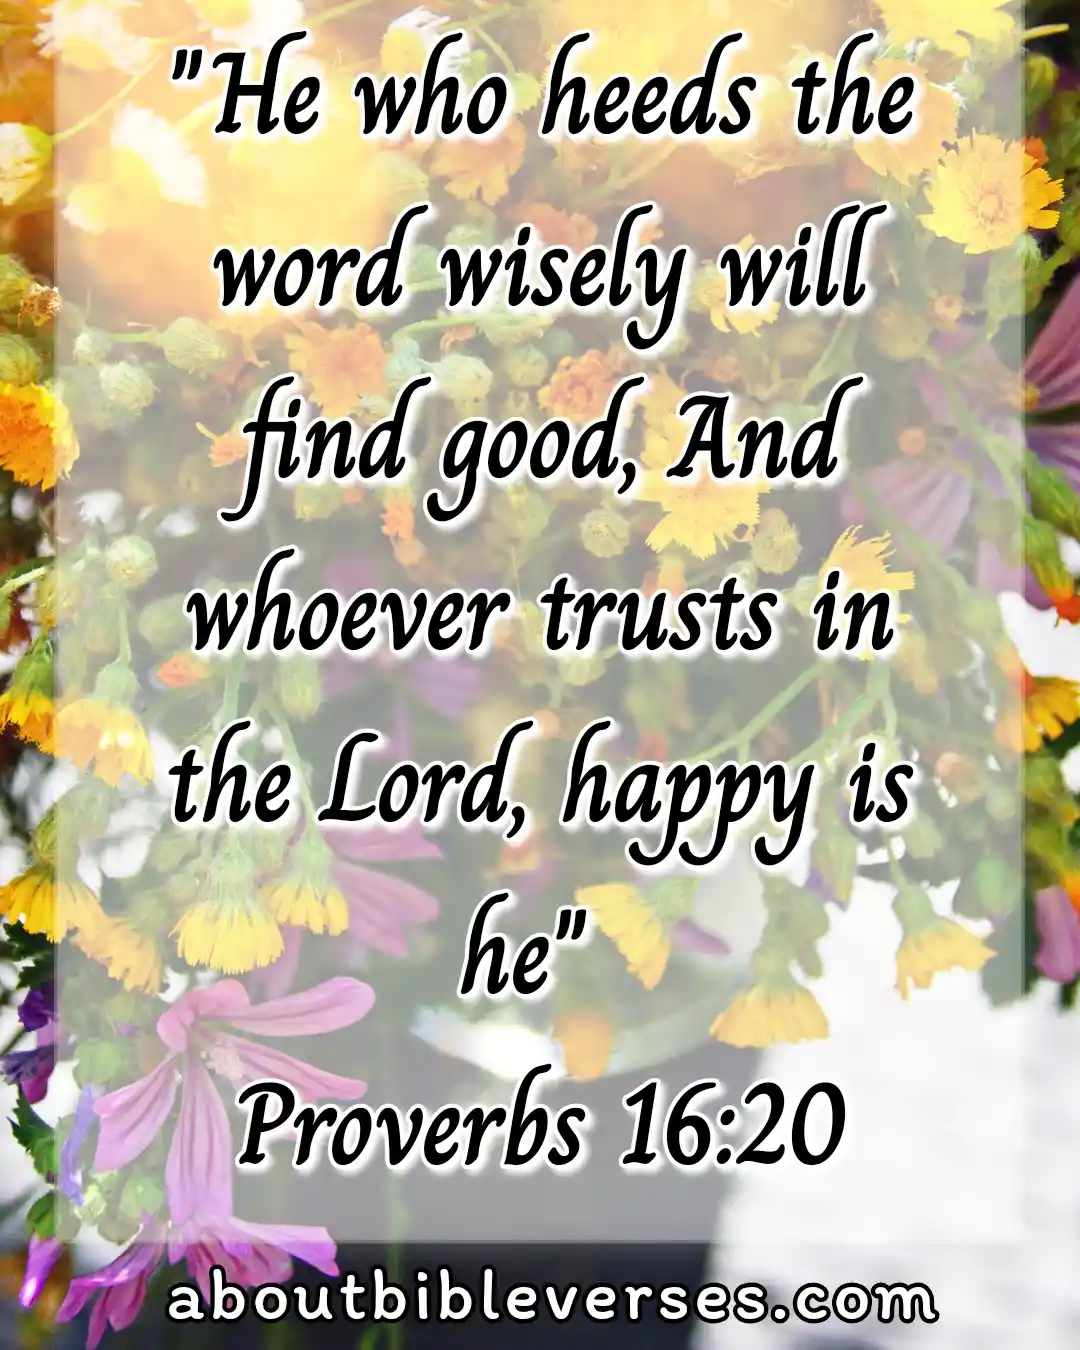 Wednesday Morning Bible Verses (Proverbs 16:20)